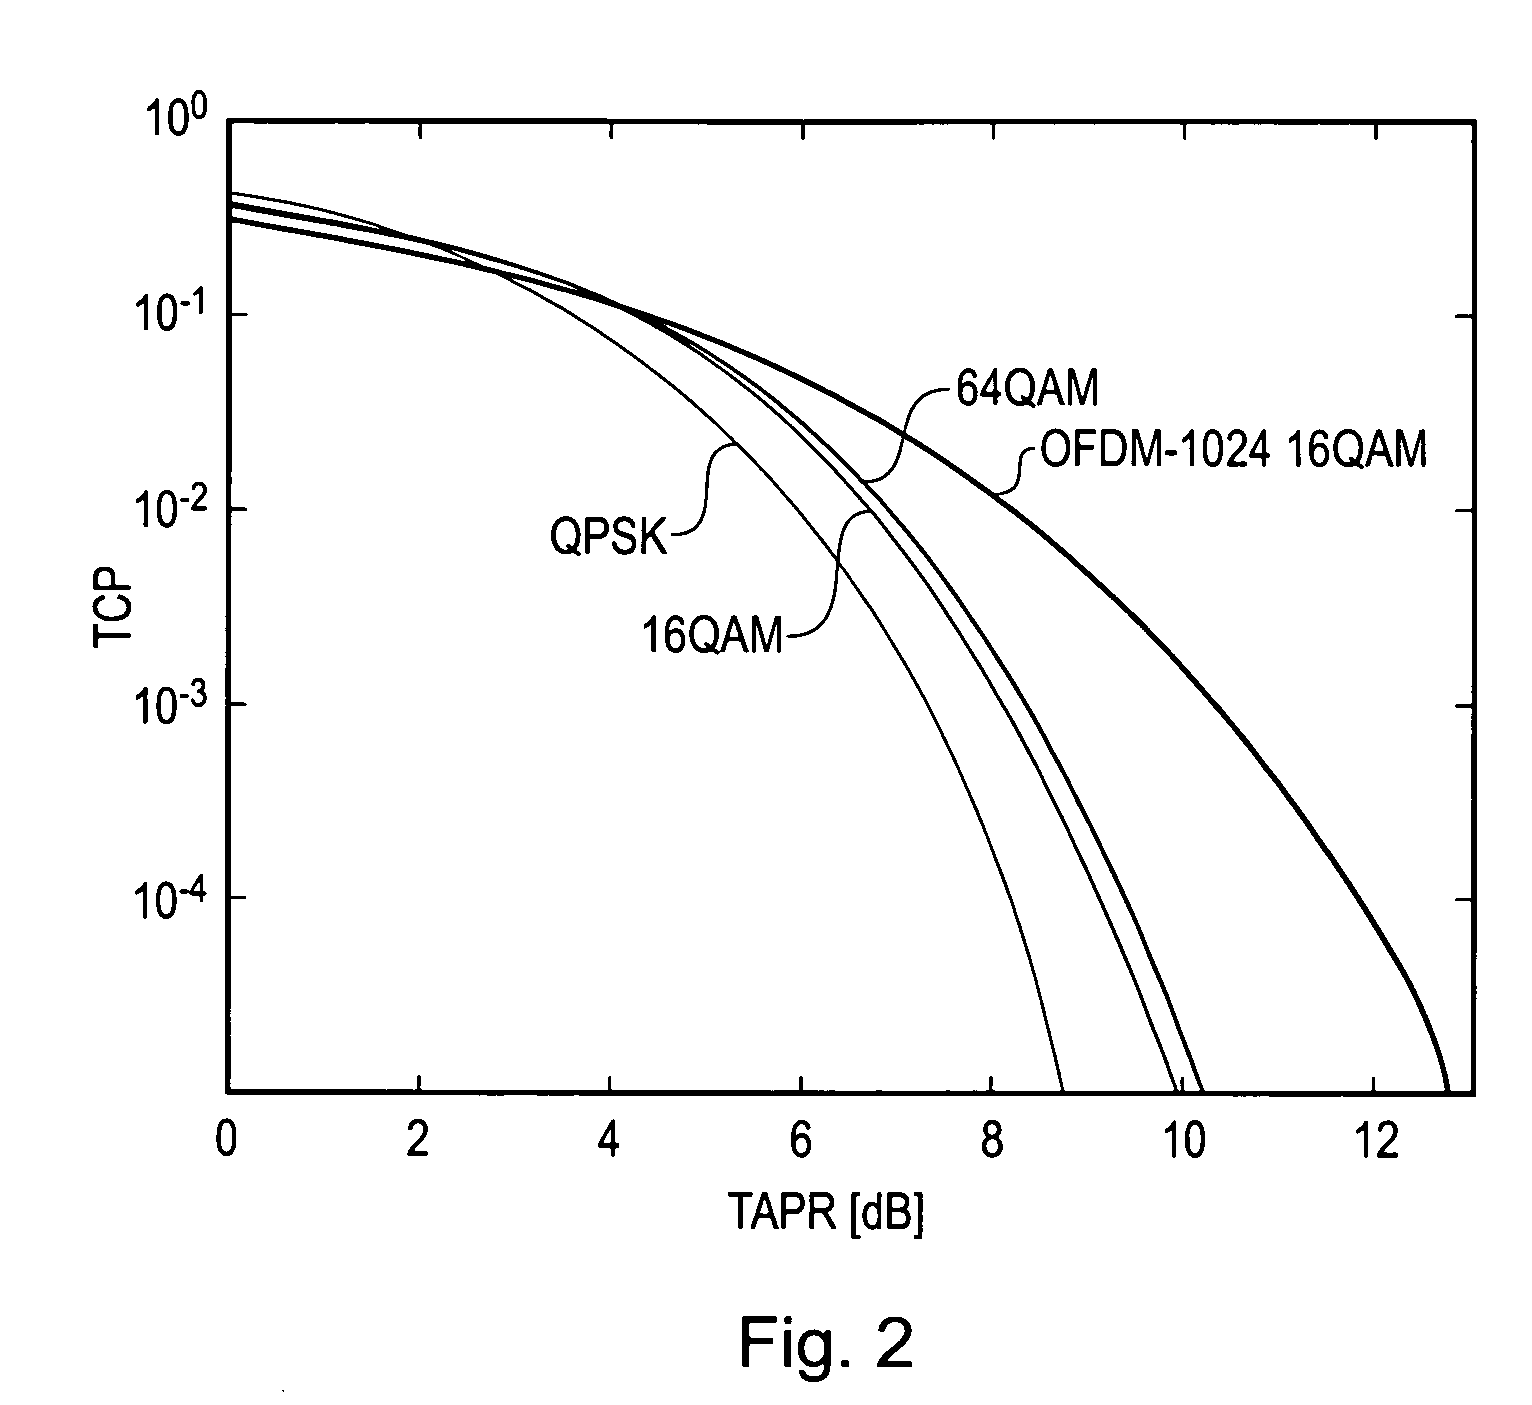 Method and apparatus of peak-to-average power ratio reduction